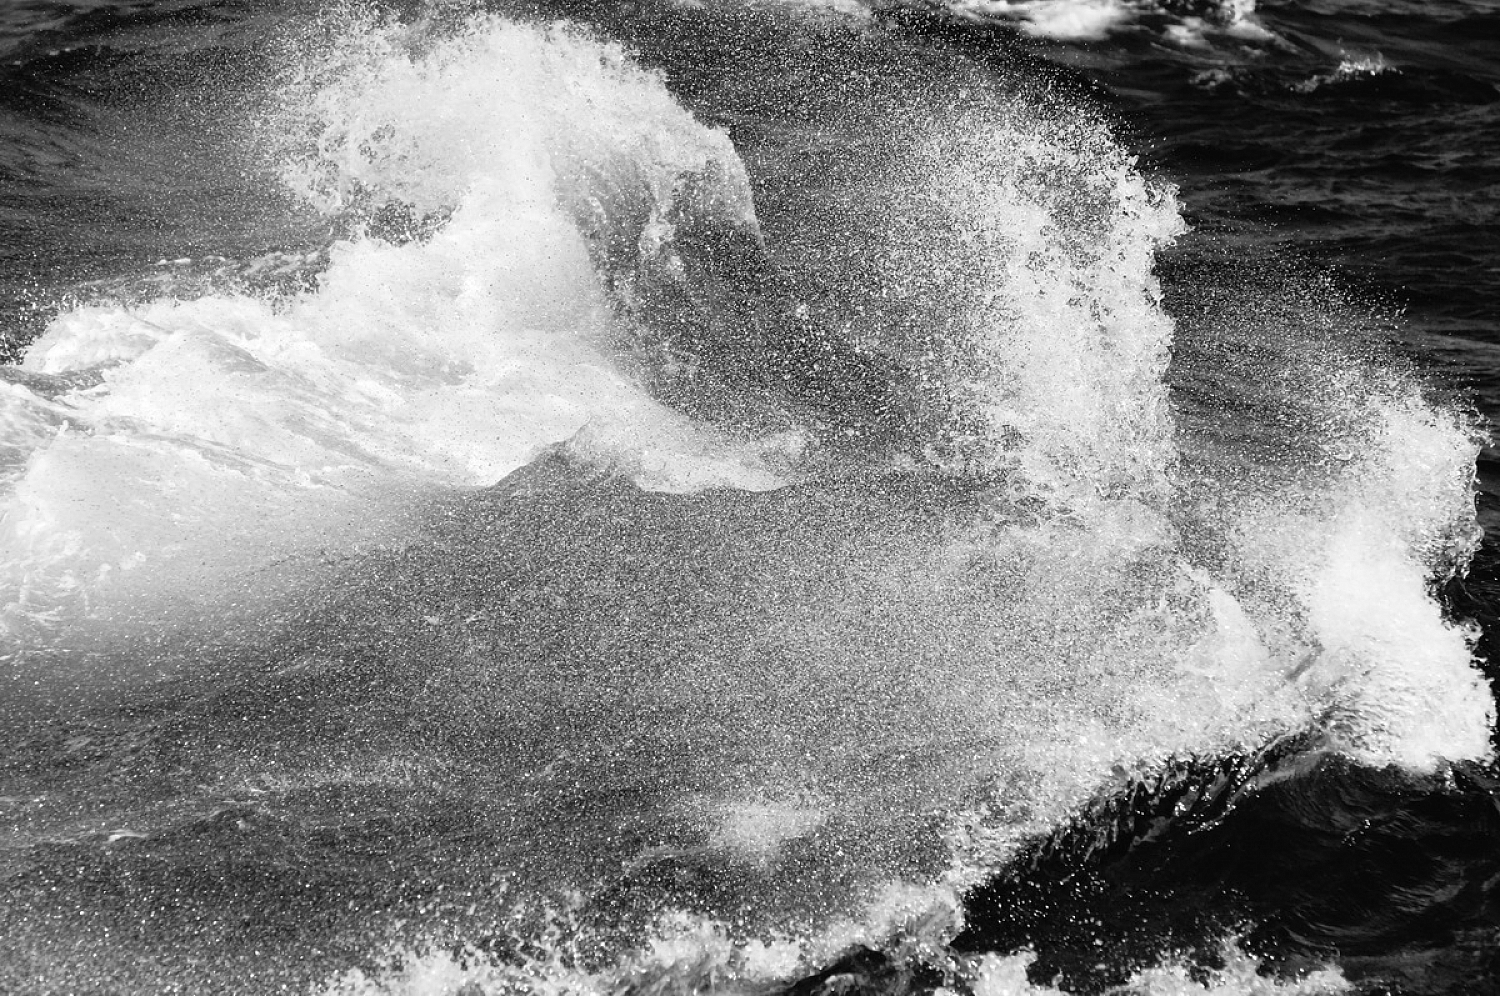 Dolph Kessler - Photobook: The Wave, crossing the Atlantic 